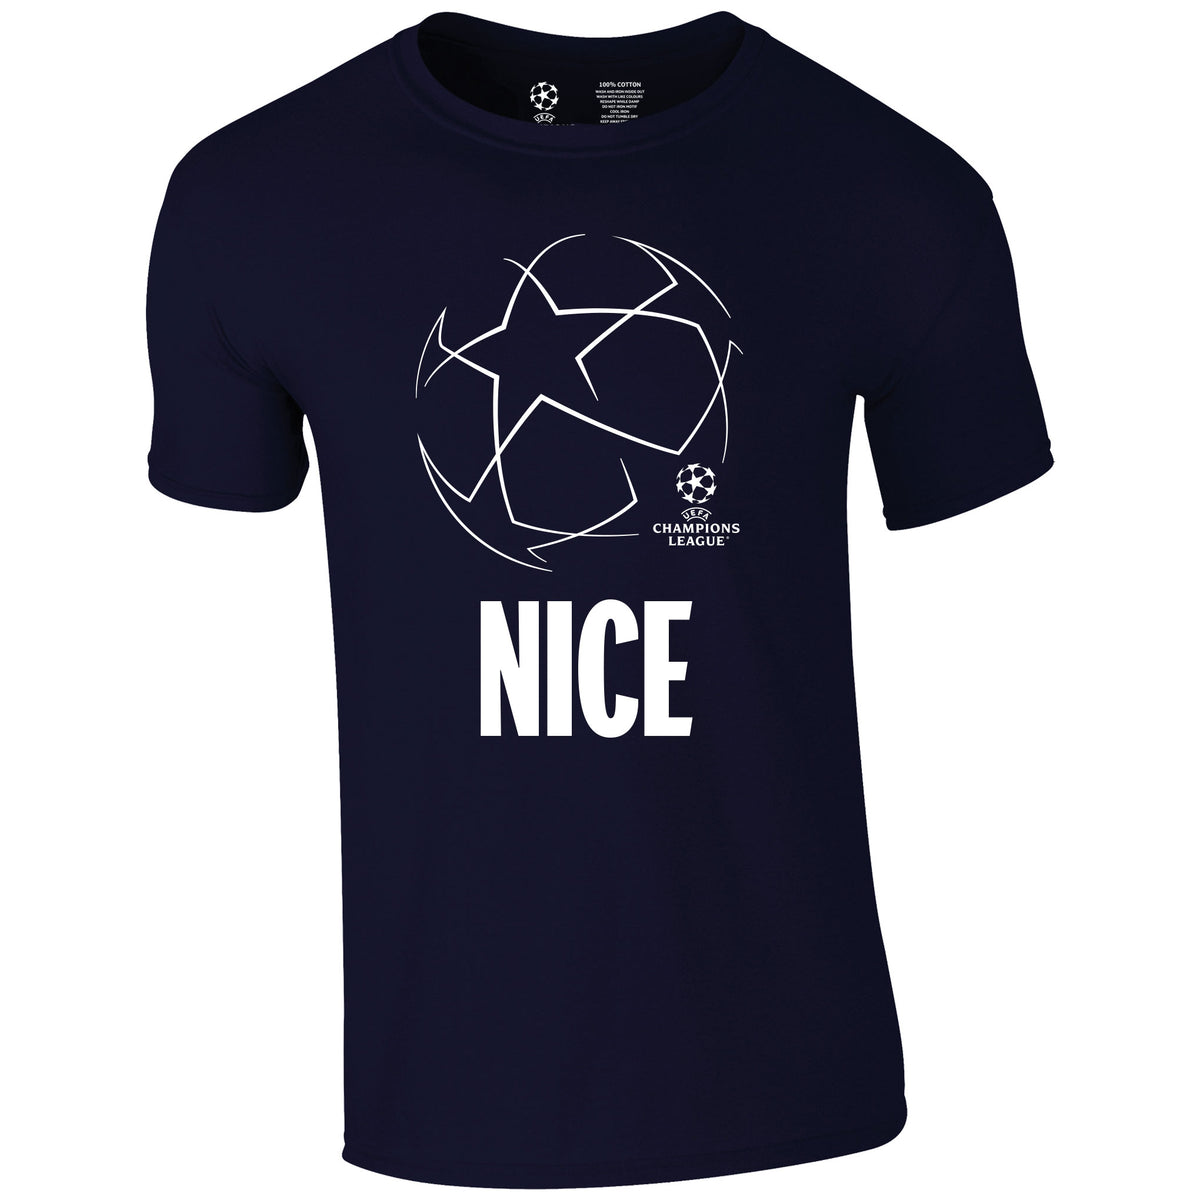 Champions League Starball Nice City T-Shirt Navy